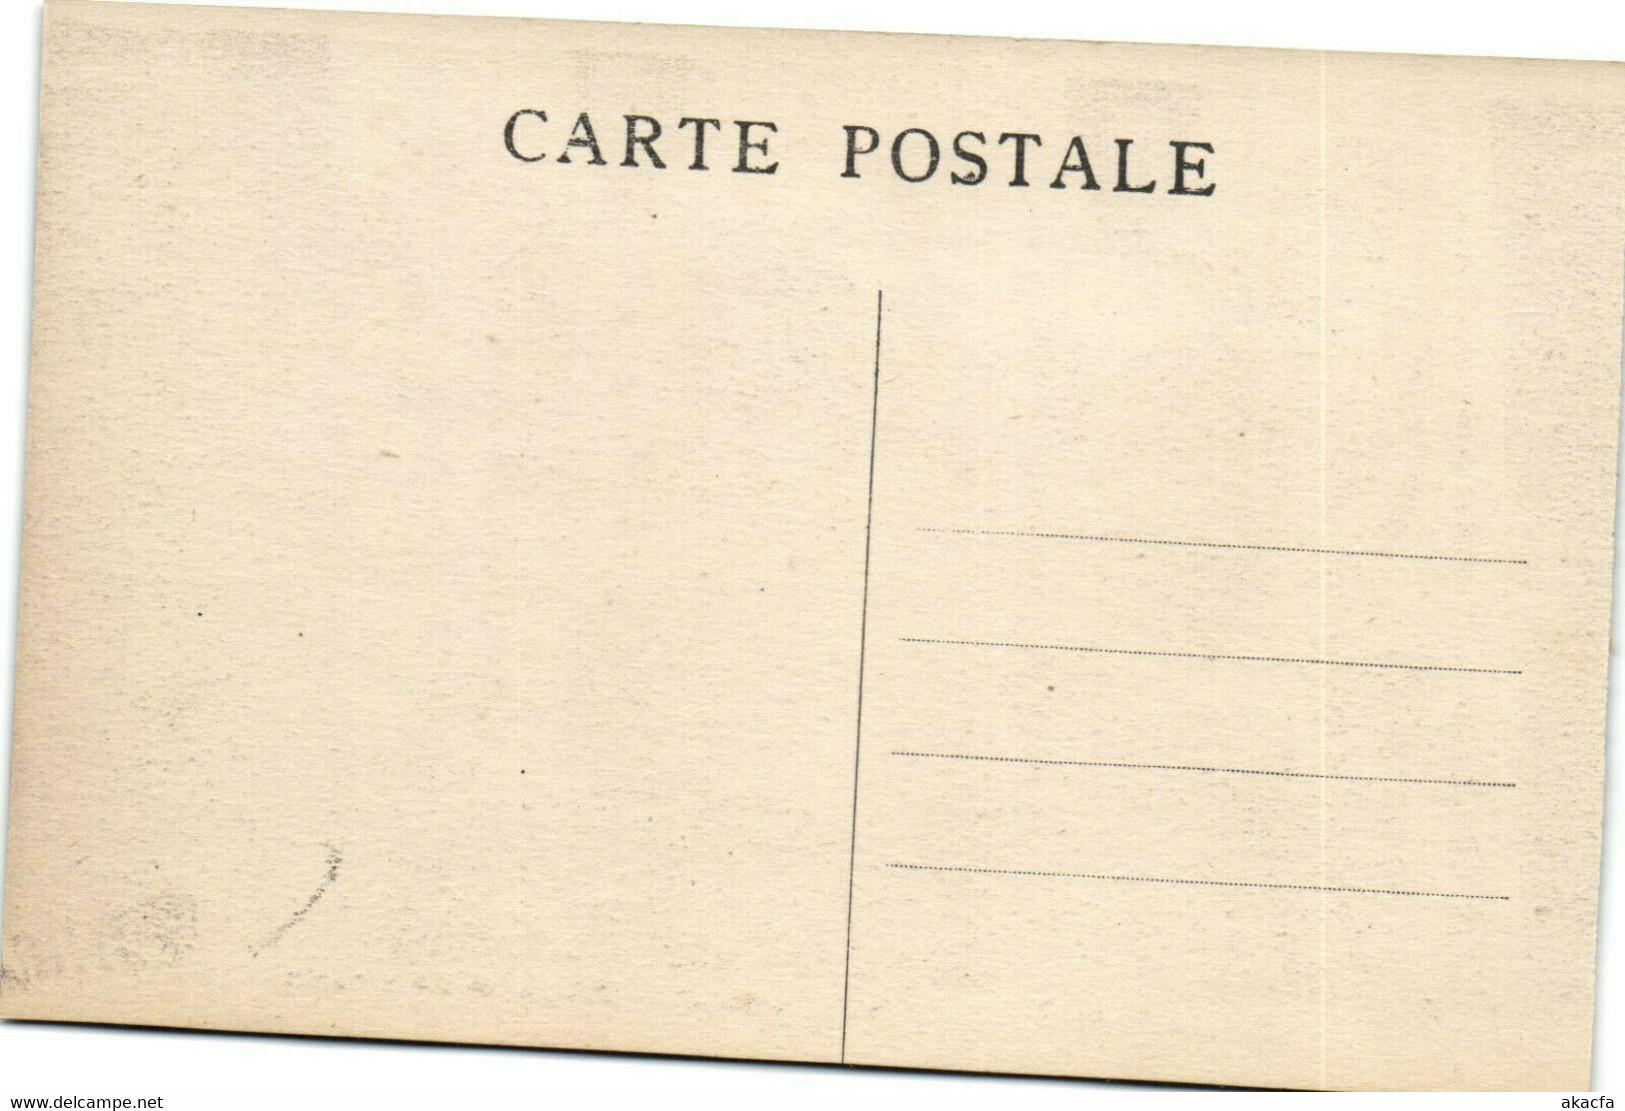 PC UK, SALOMON ISLANDS, PARURES DE FÉTE, Vintage Postcard (b33520) - Islas Salomon